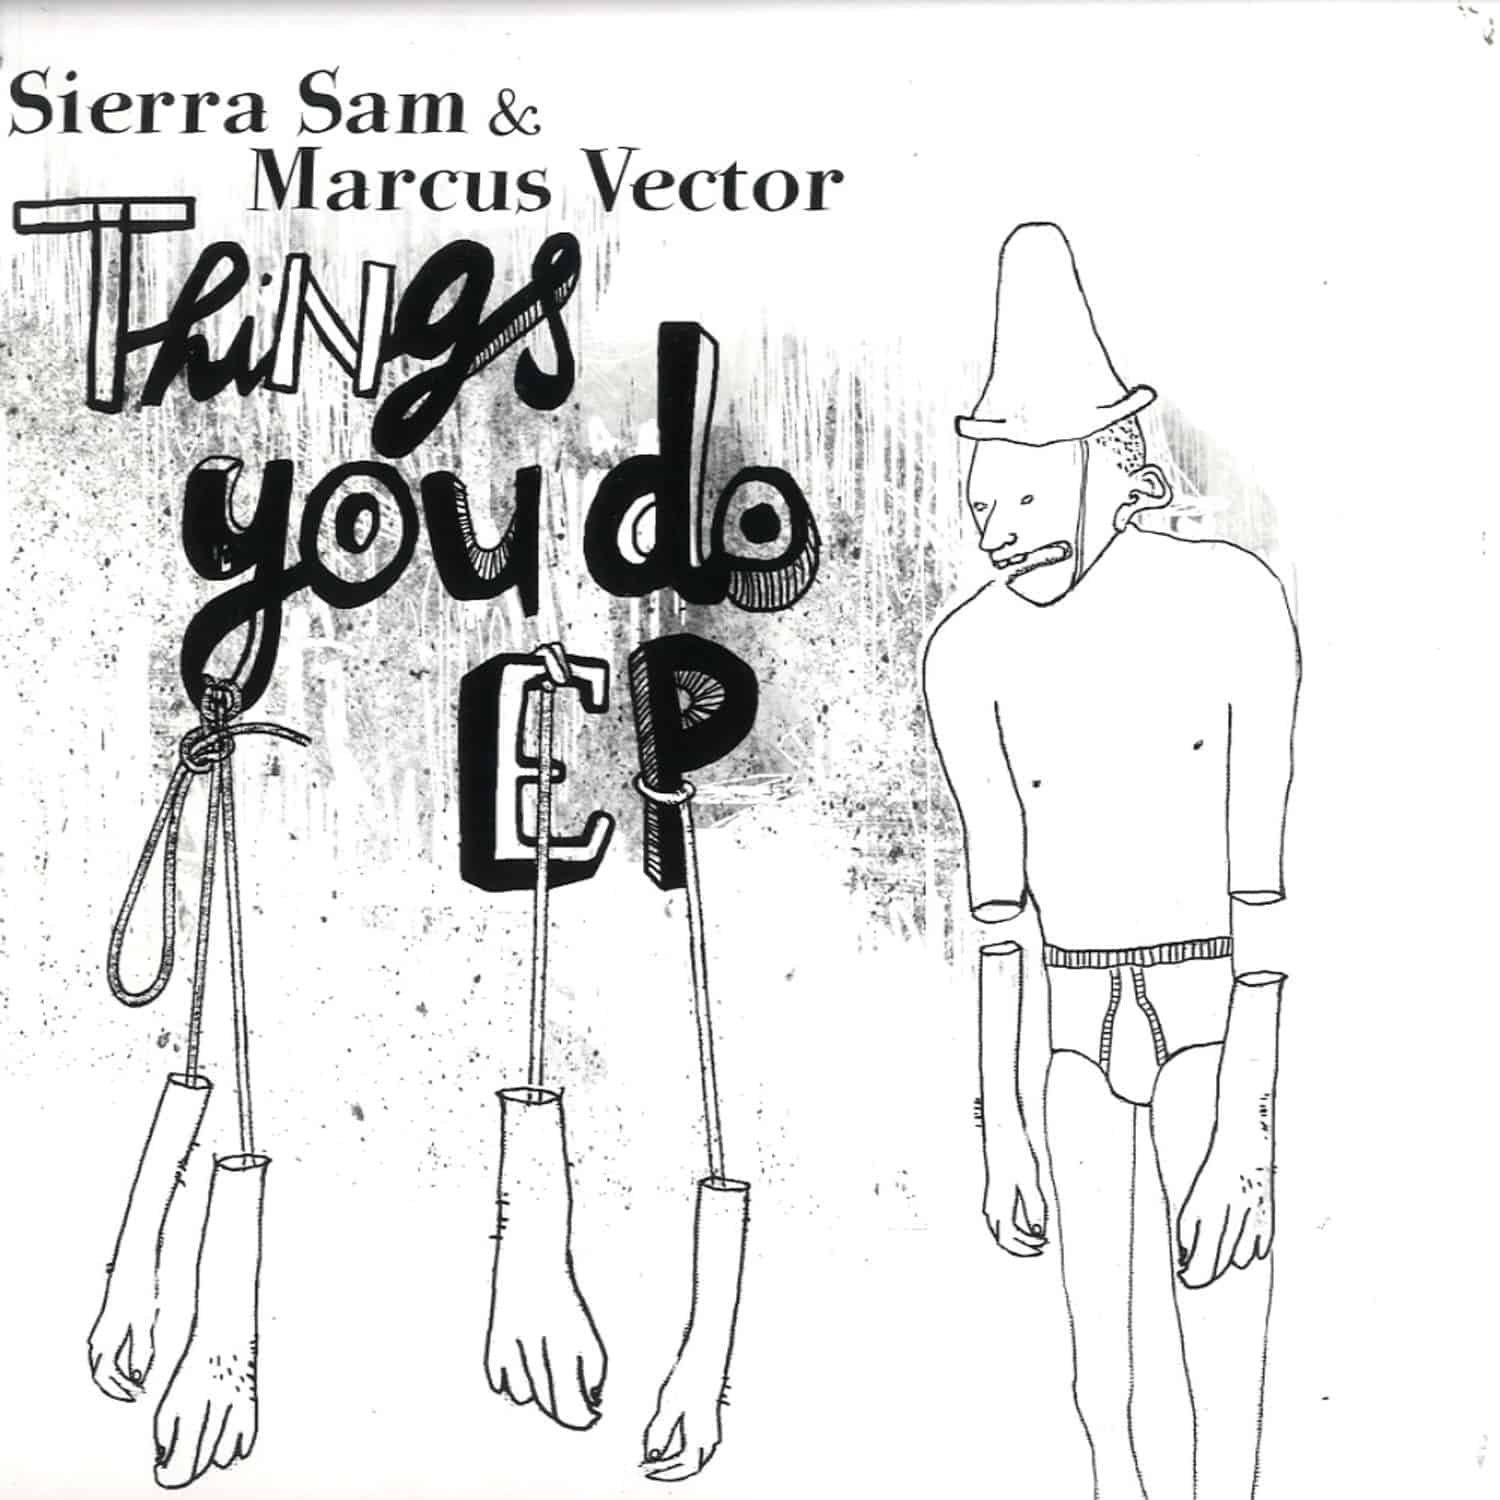 Sierra Sam & Marcus Vecor - THINGS YOU DO